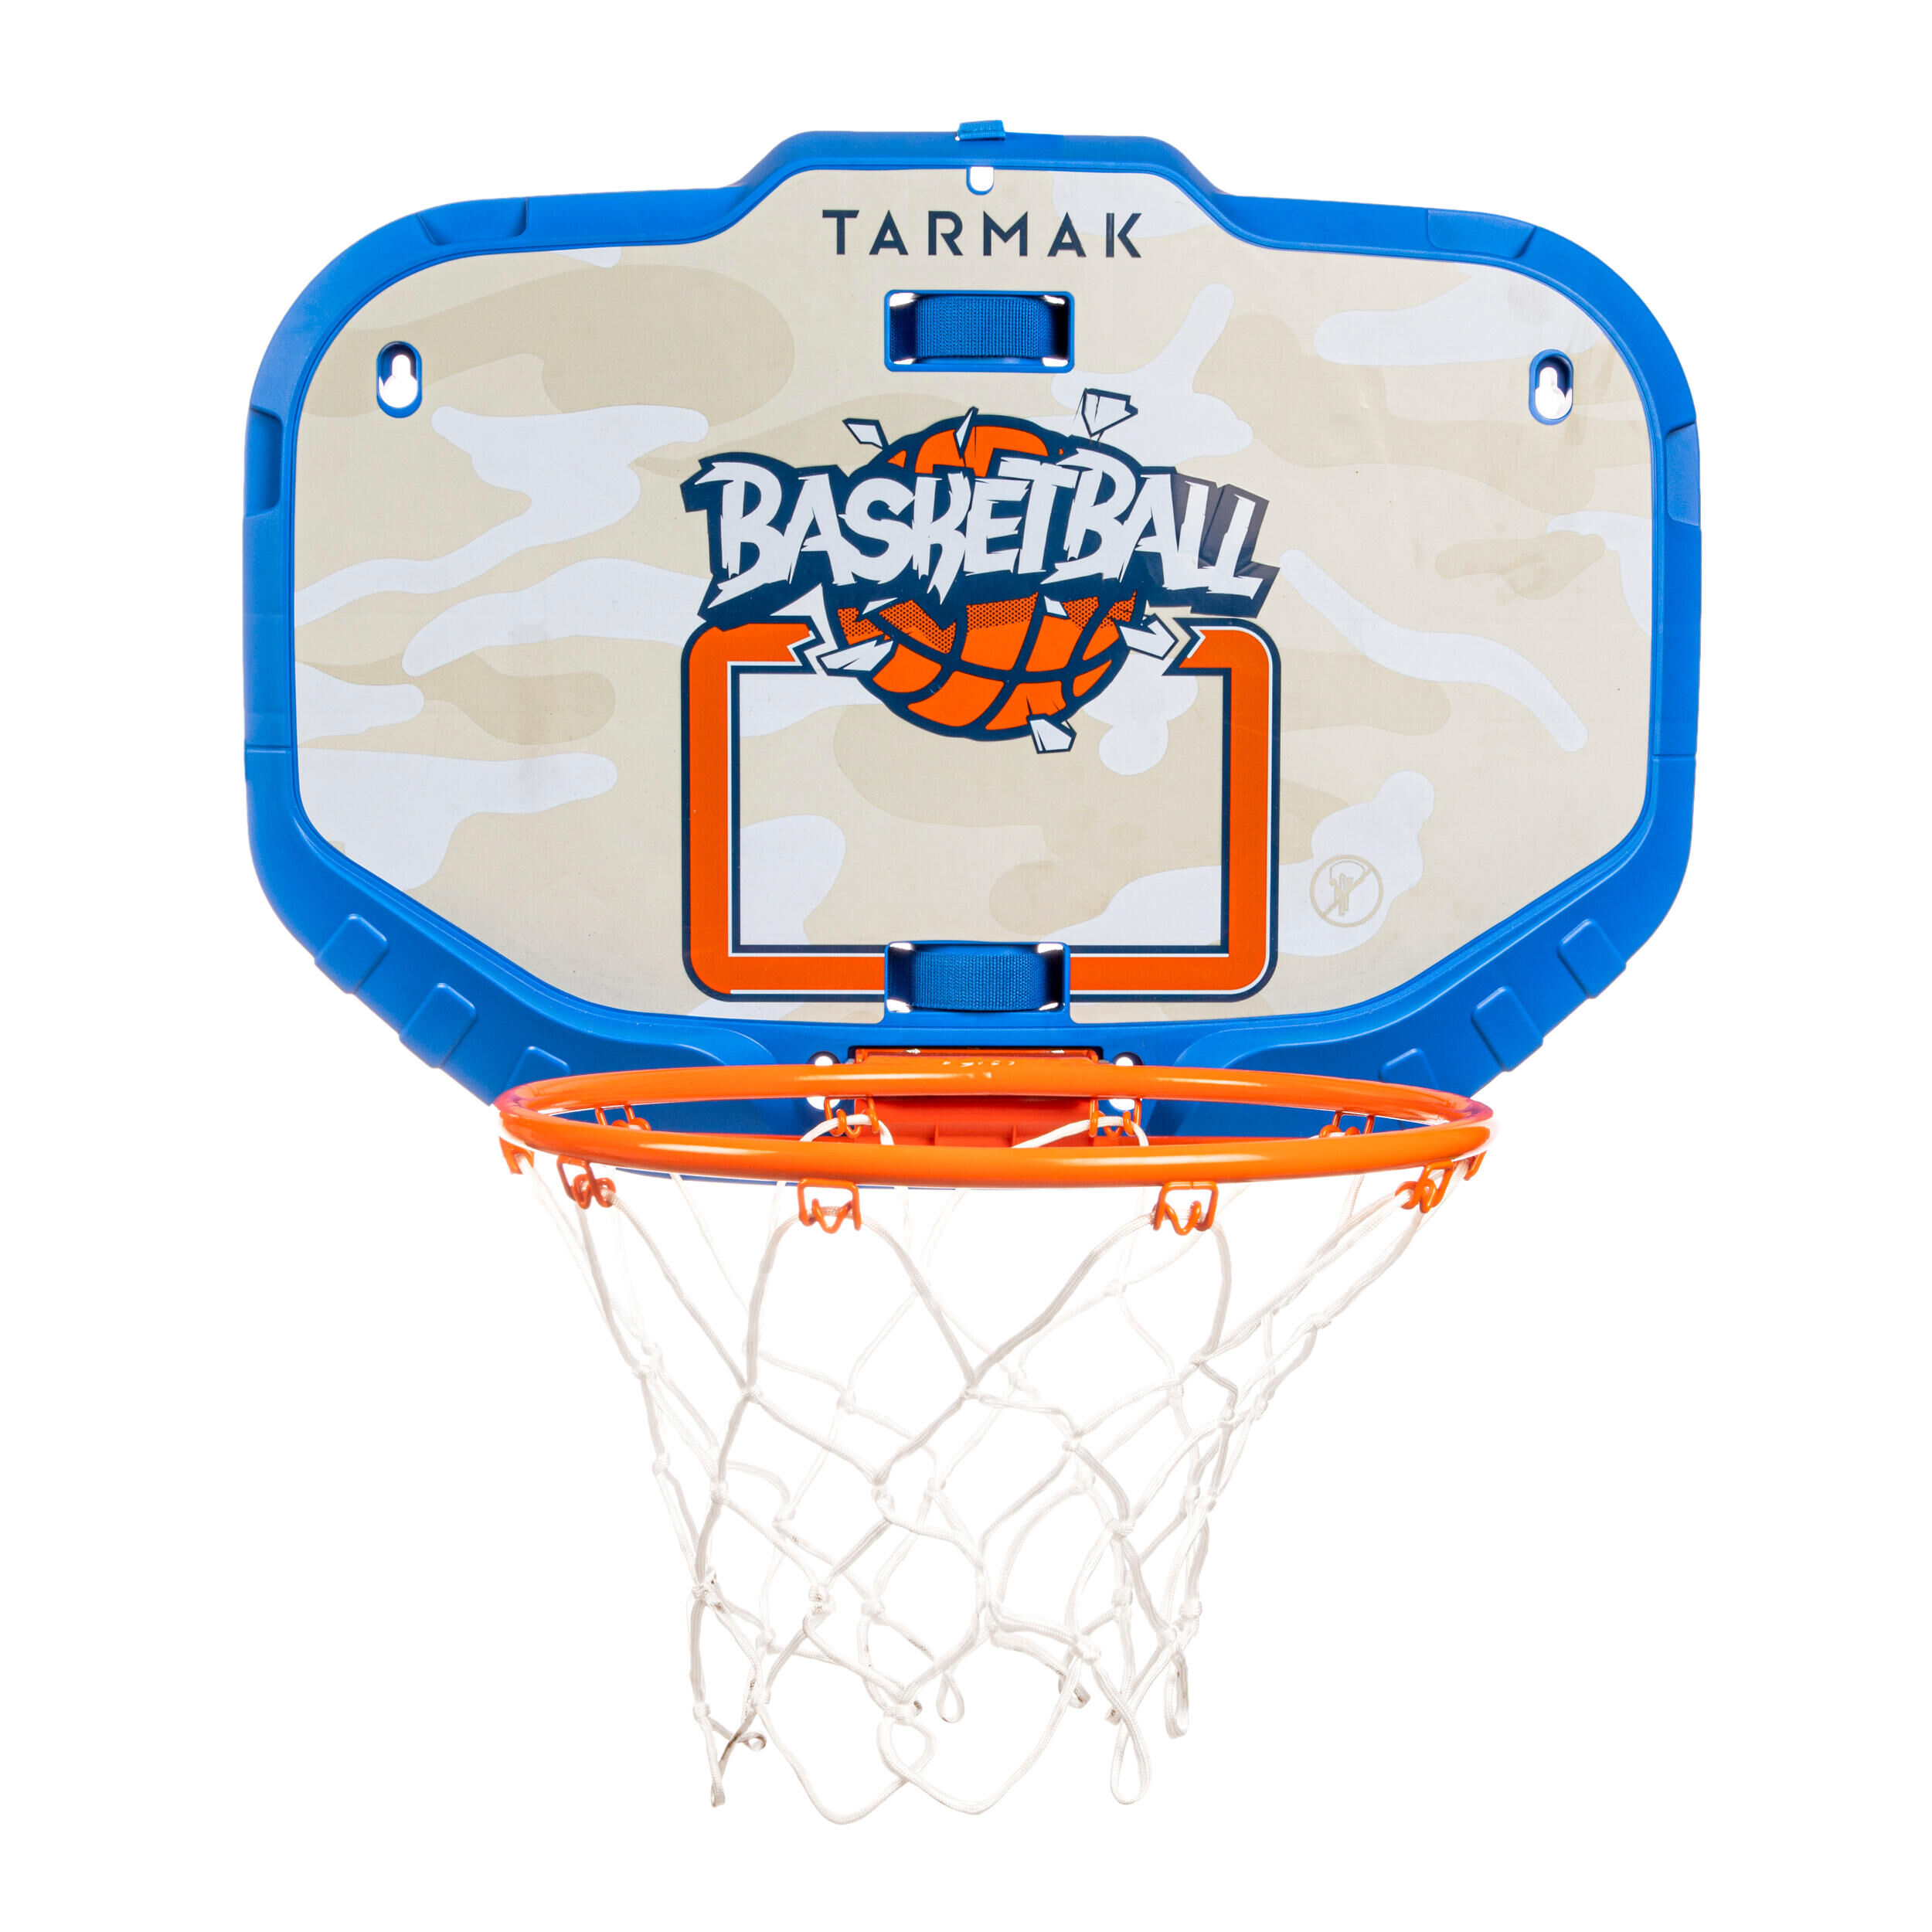 TARMAK Wall-Mounted Transportable Basketball Hoop Set K900 - Blue/Orange